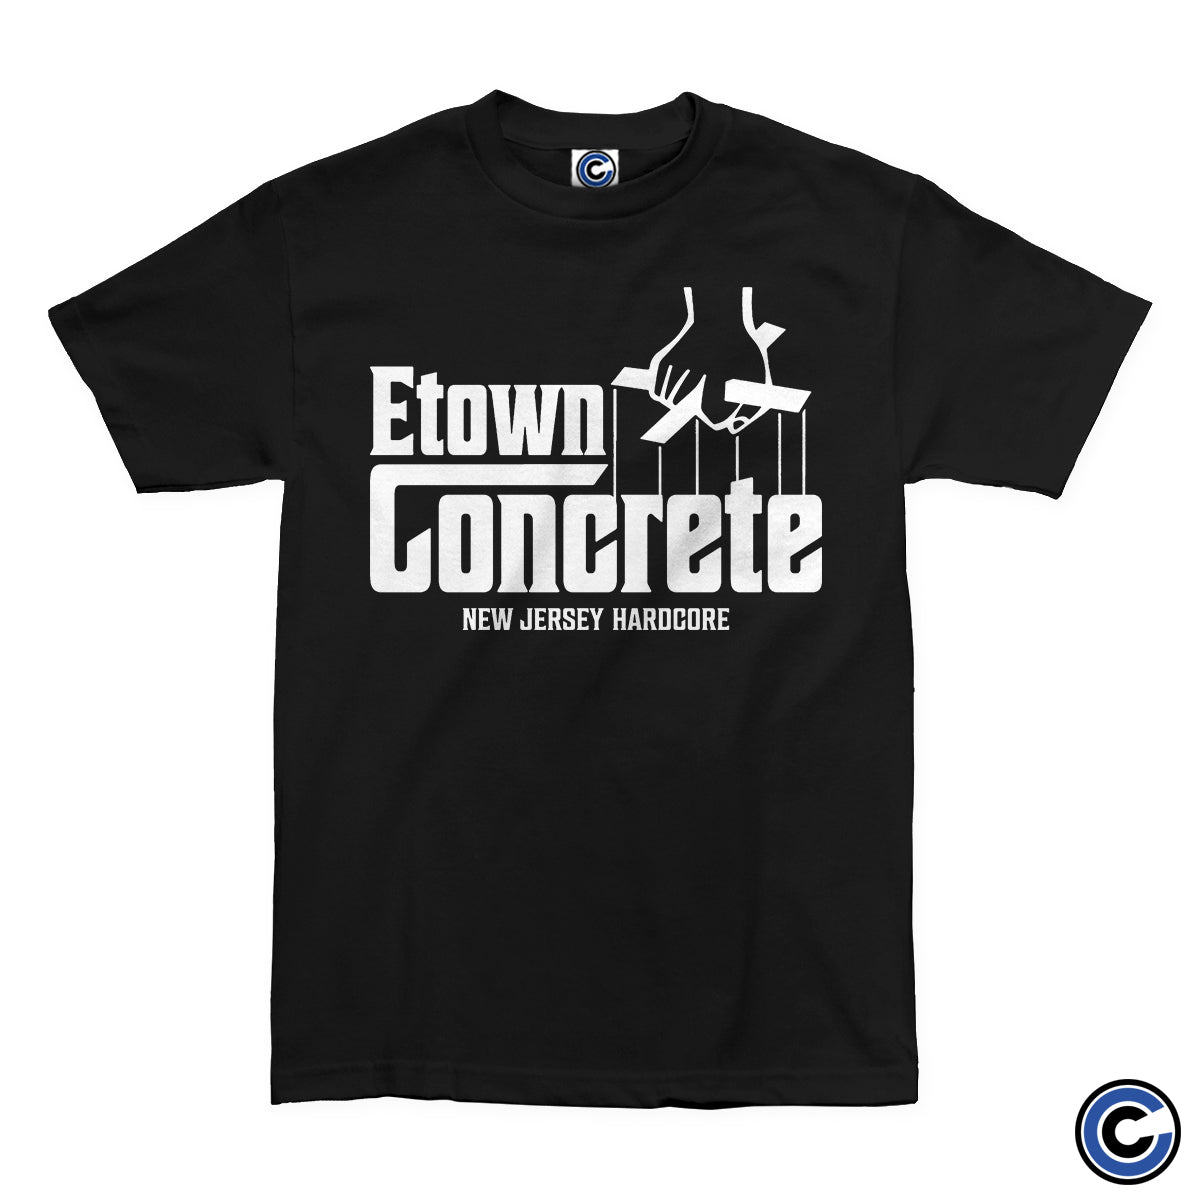 E. Town Concrete "Godfather" Shirt